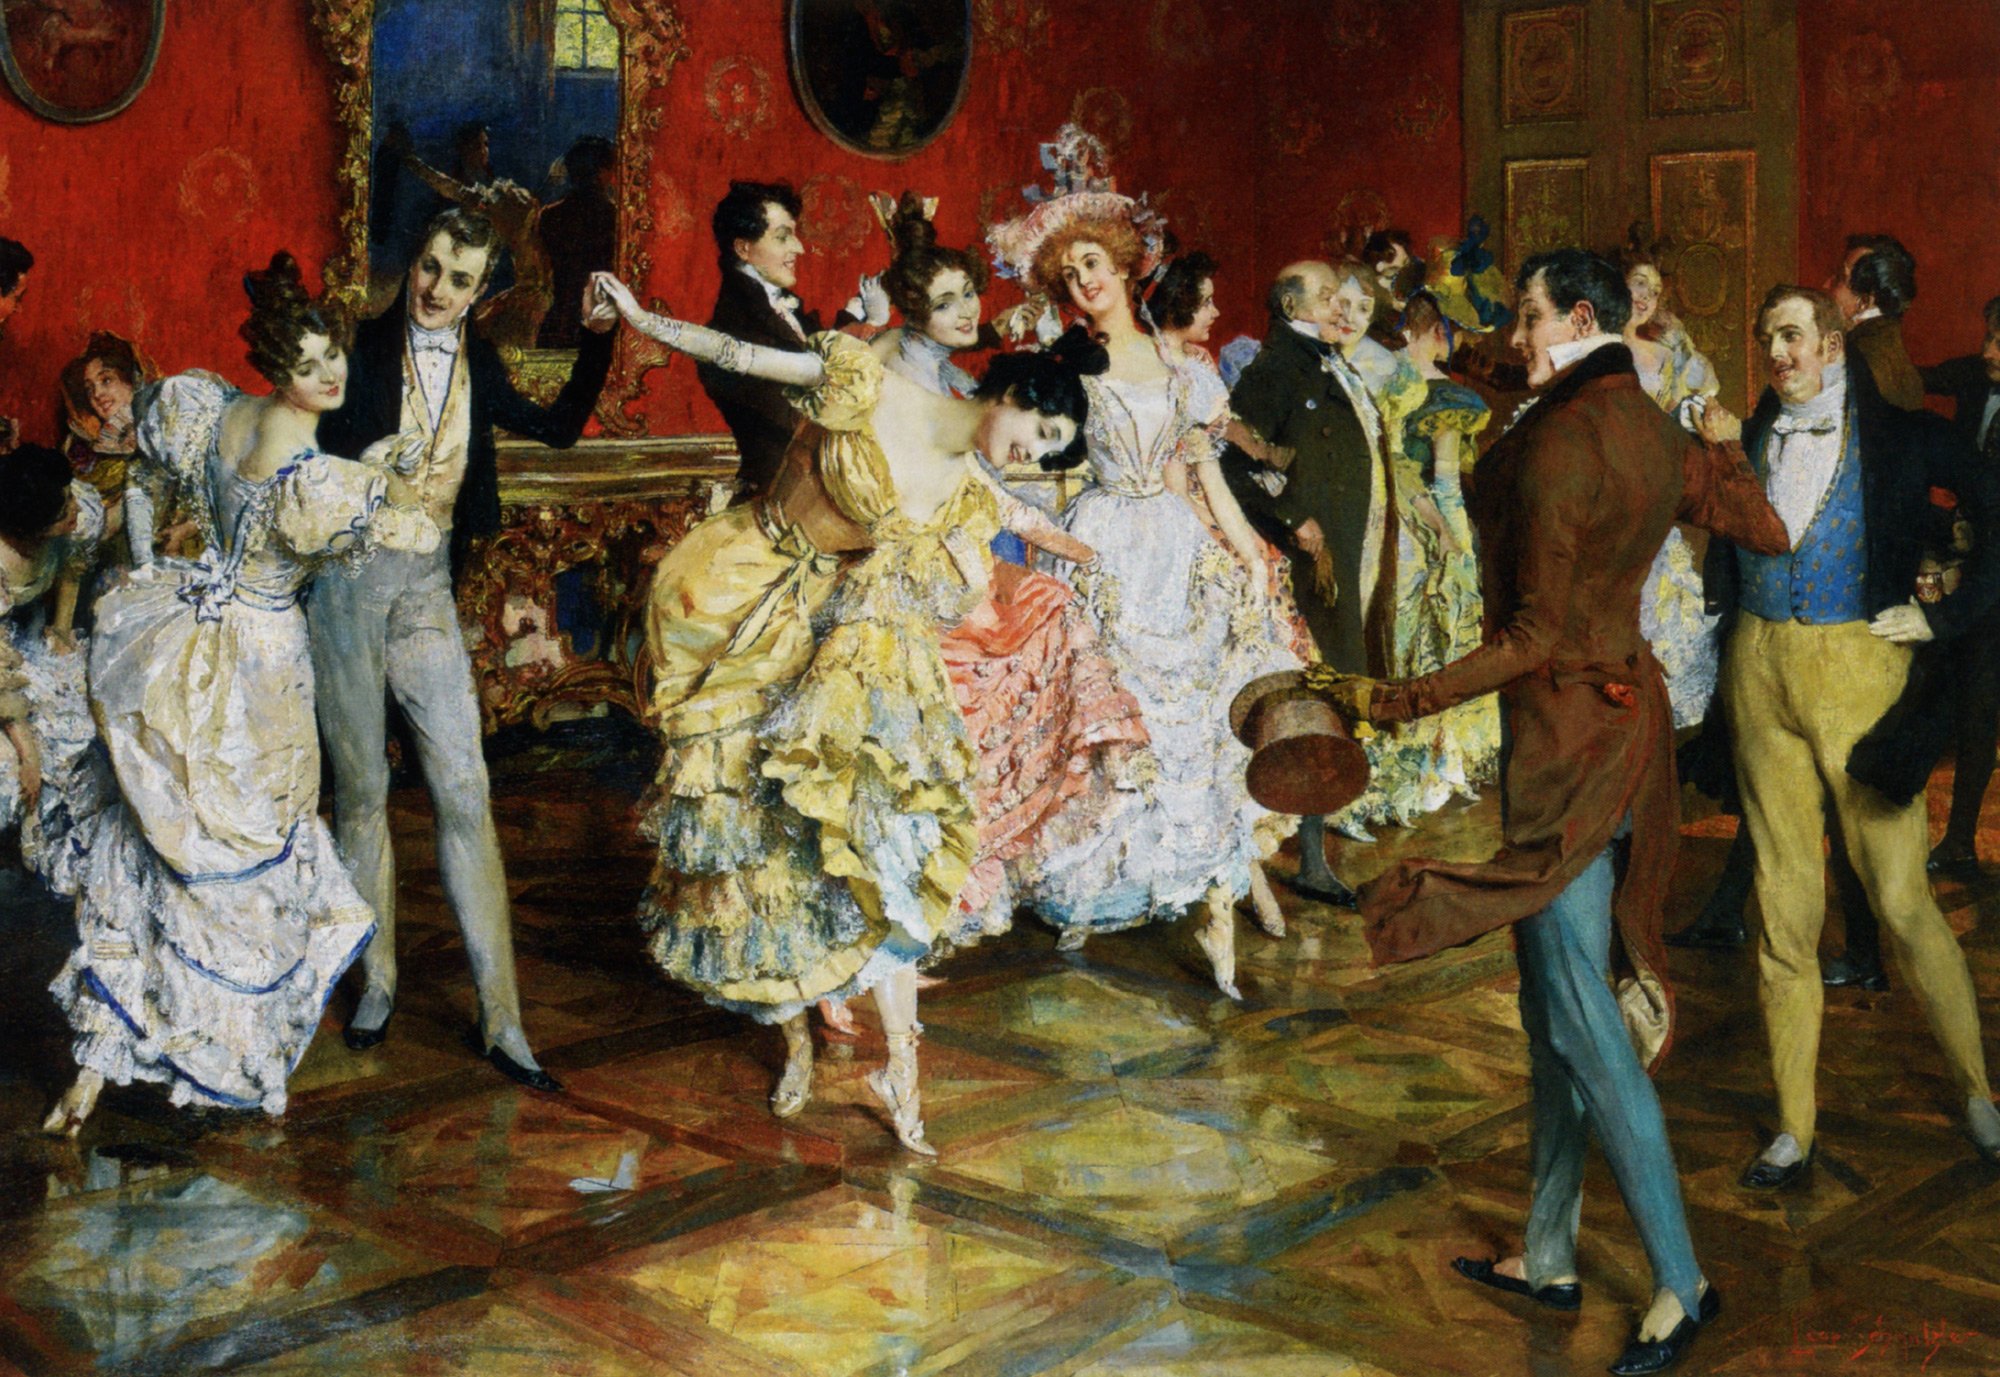 Танцы 19 века на балах. Мазурка на балу 19 века. Великосветский бал 19 века.